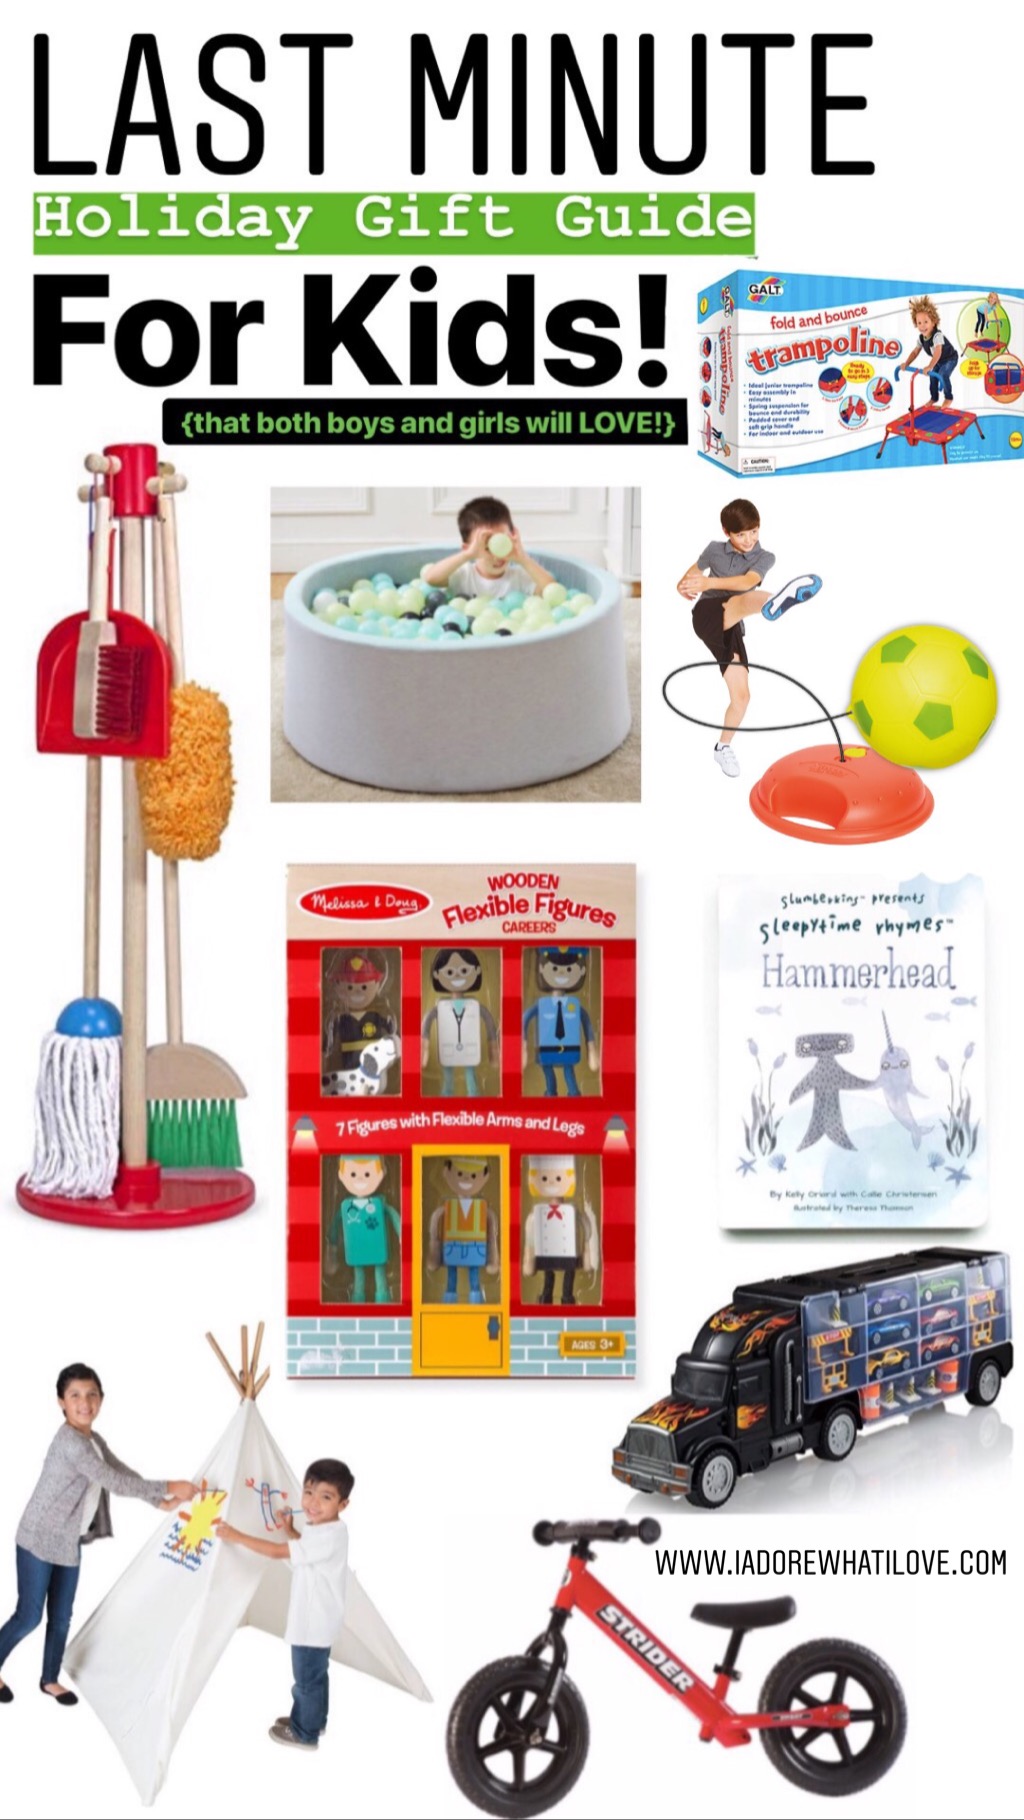 Last Minute Holiday Gift Guide For Kids :: I Adore What I Love Blog :: www.iadorewhatilove.com #iadorewhatilove